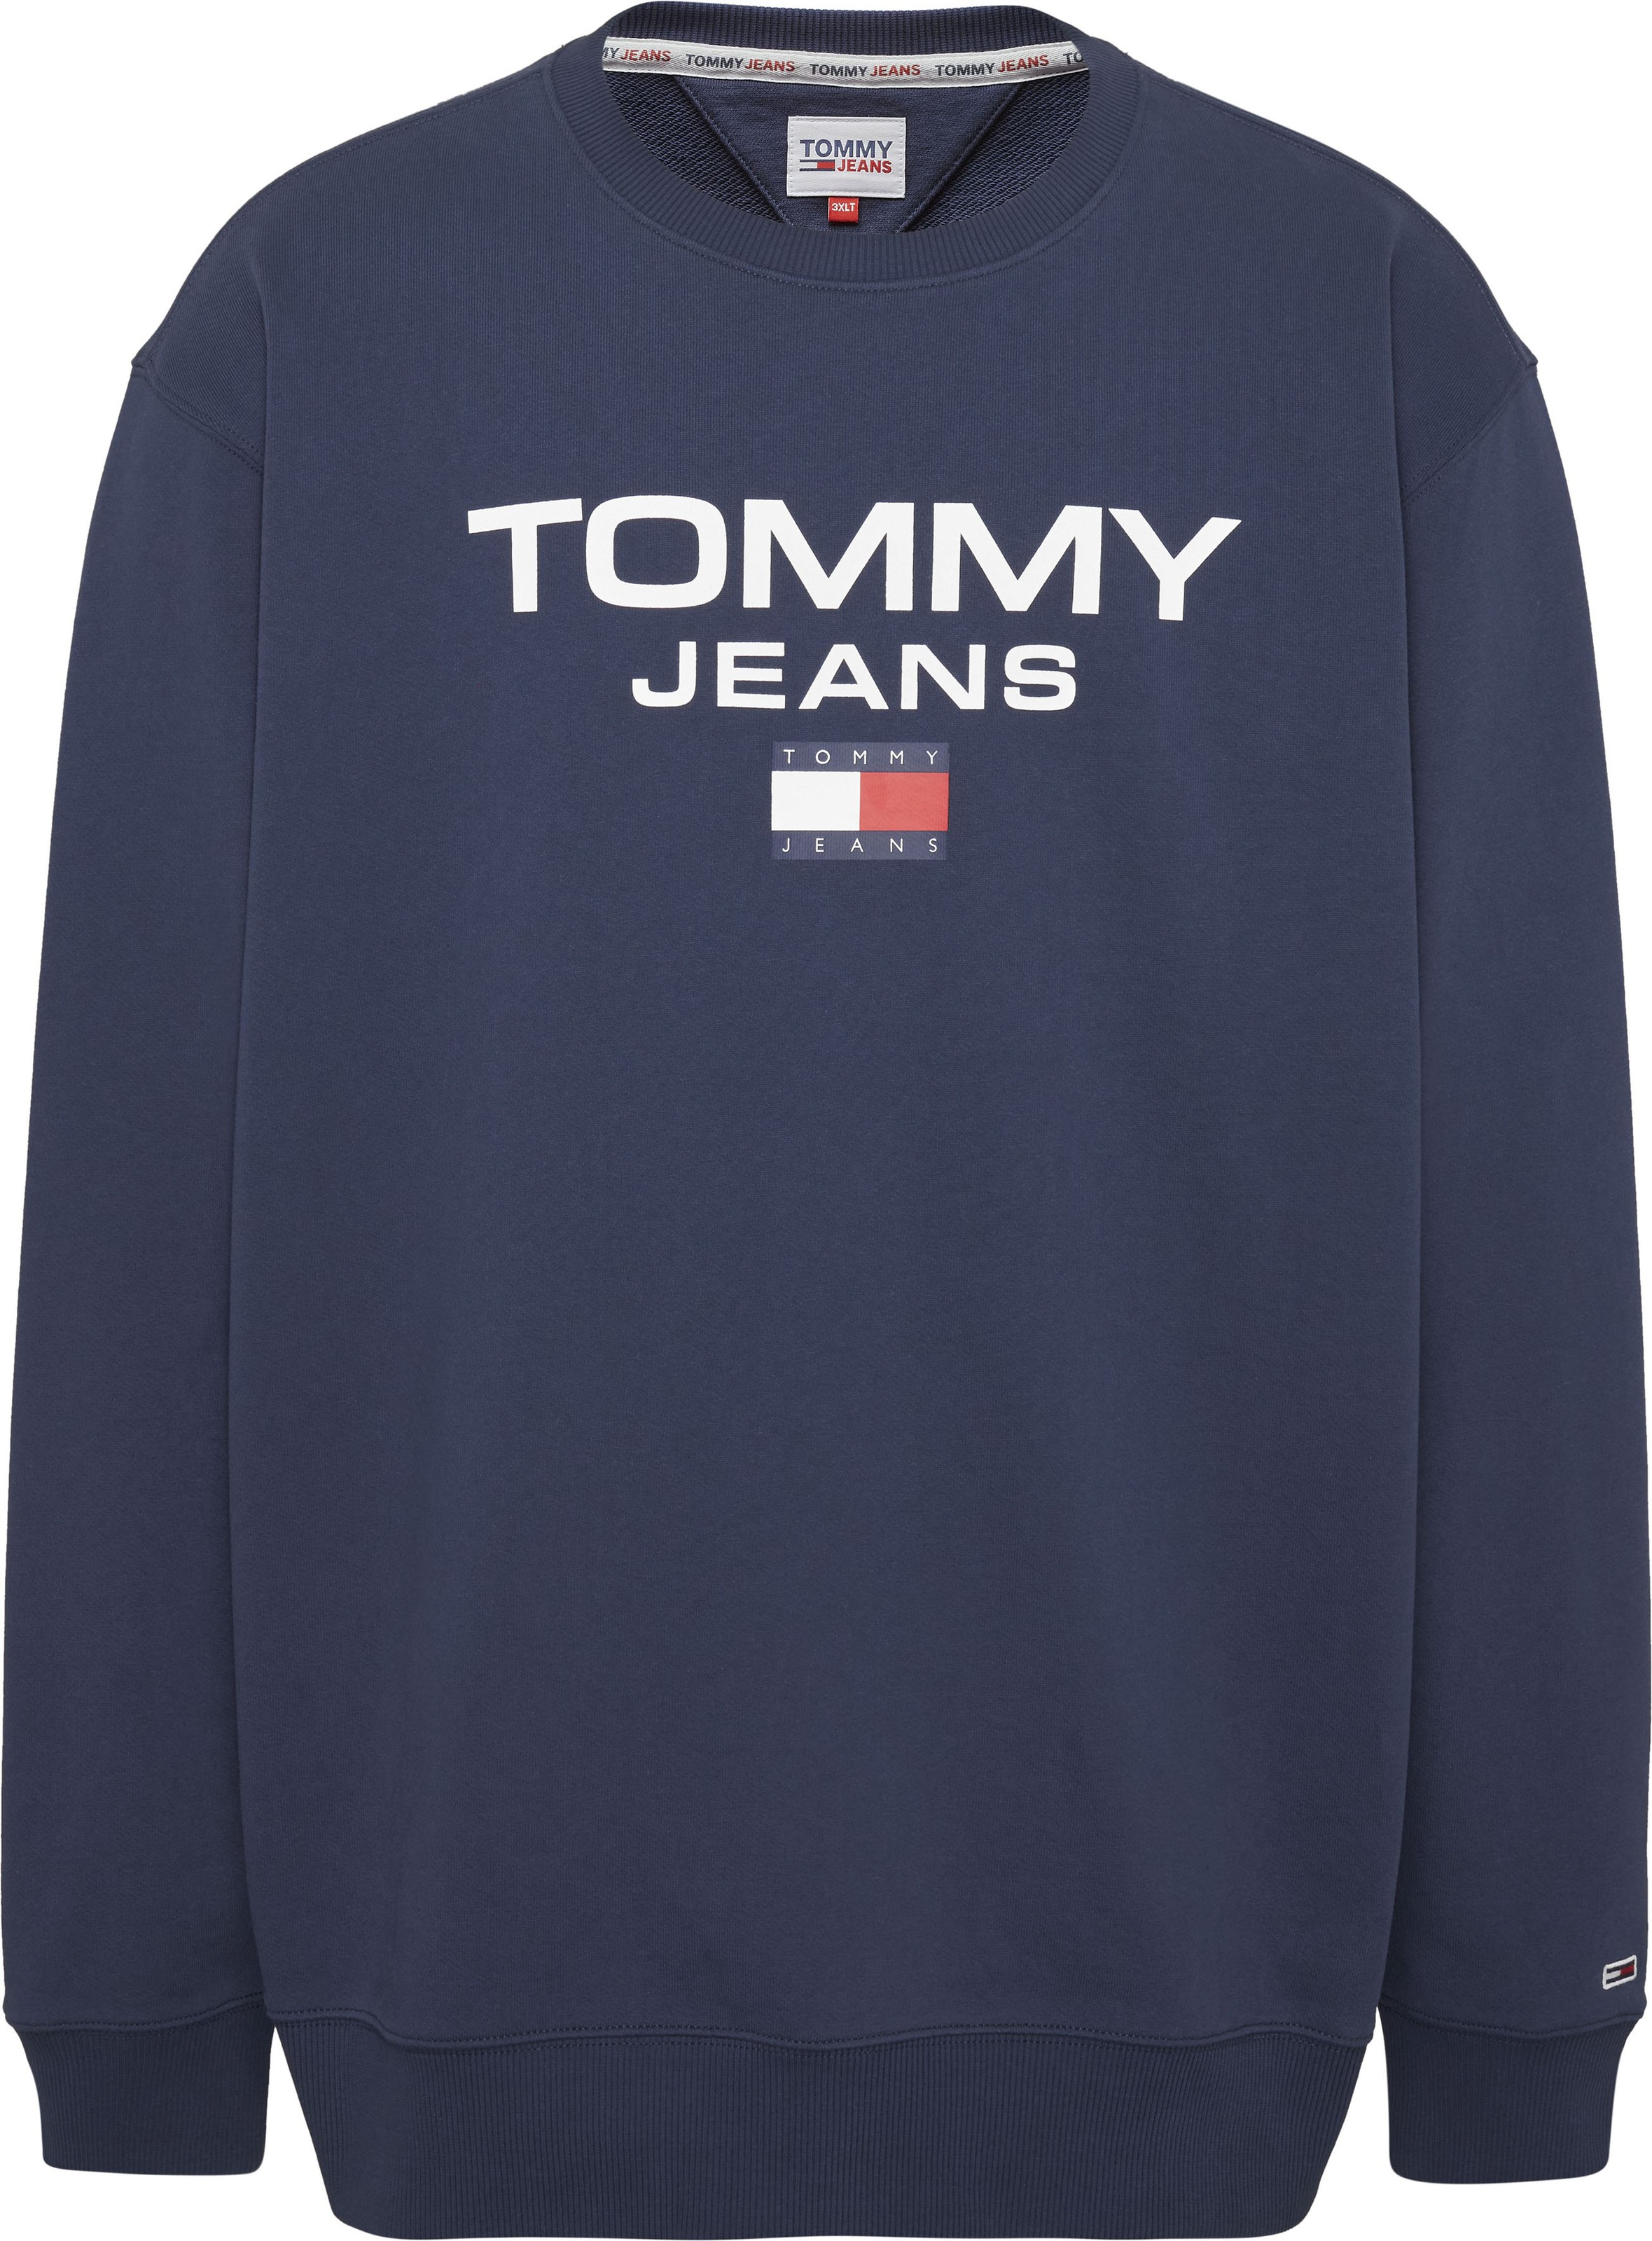 tommy jeans plus -  Sweatshirt, mit Logodruck